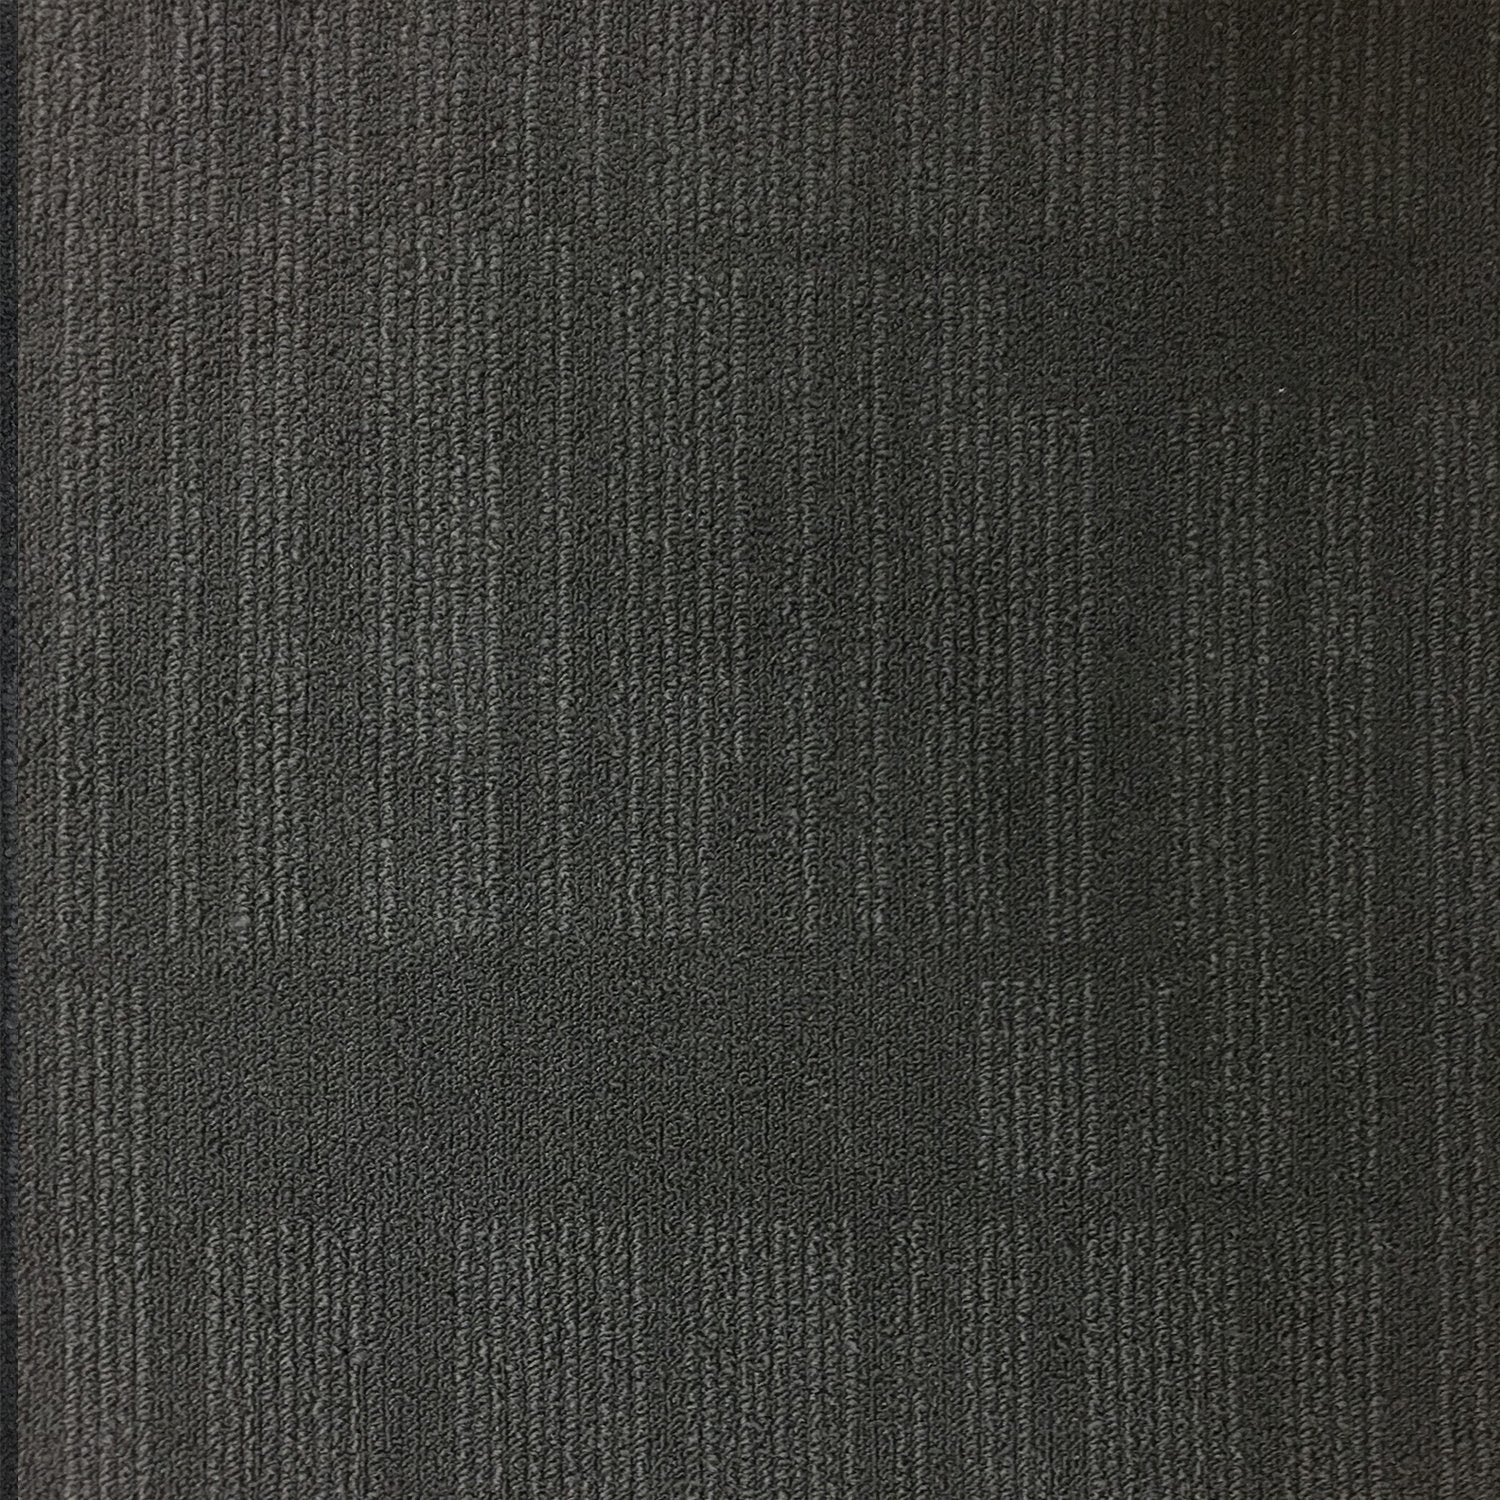 Coal Carpet Tiles